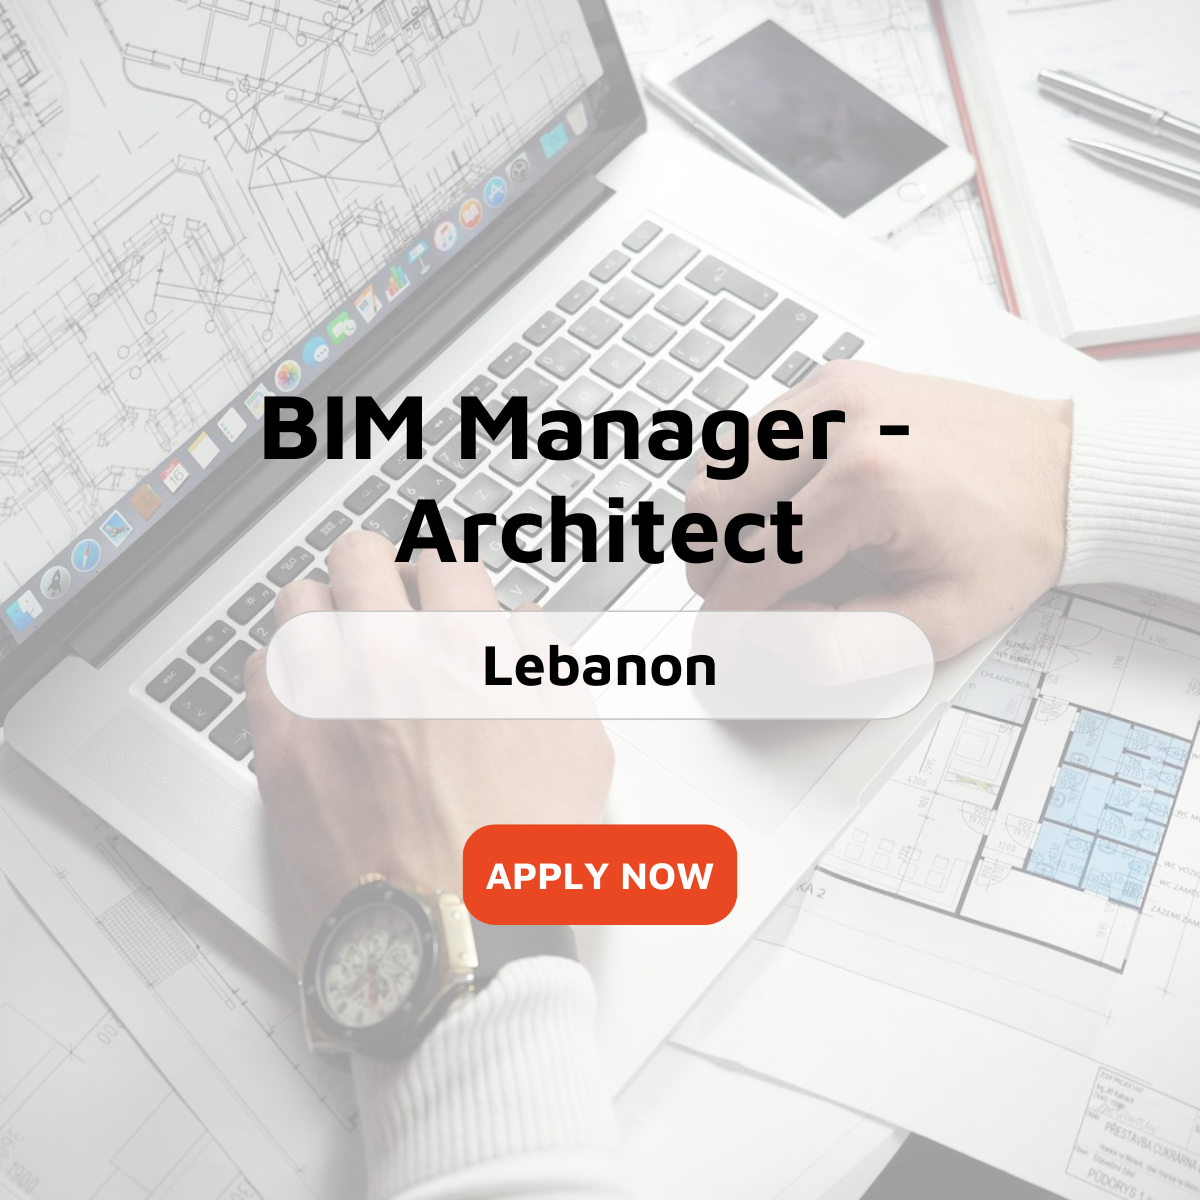 BIM Manager - Architect